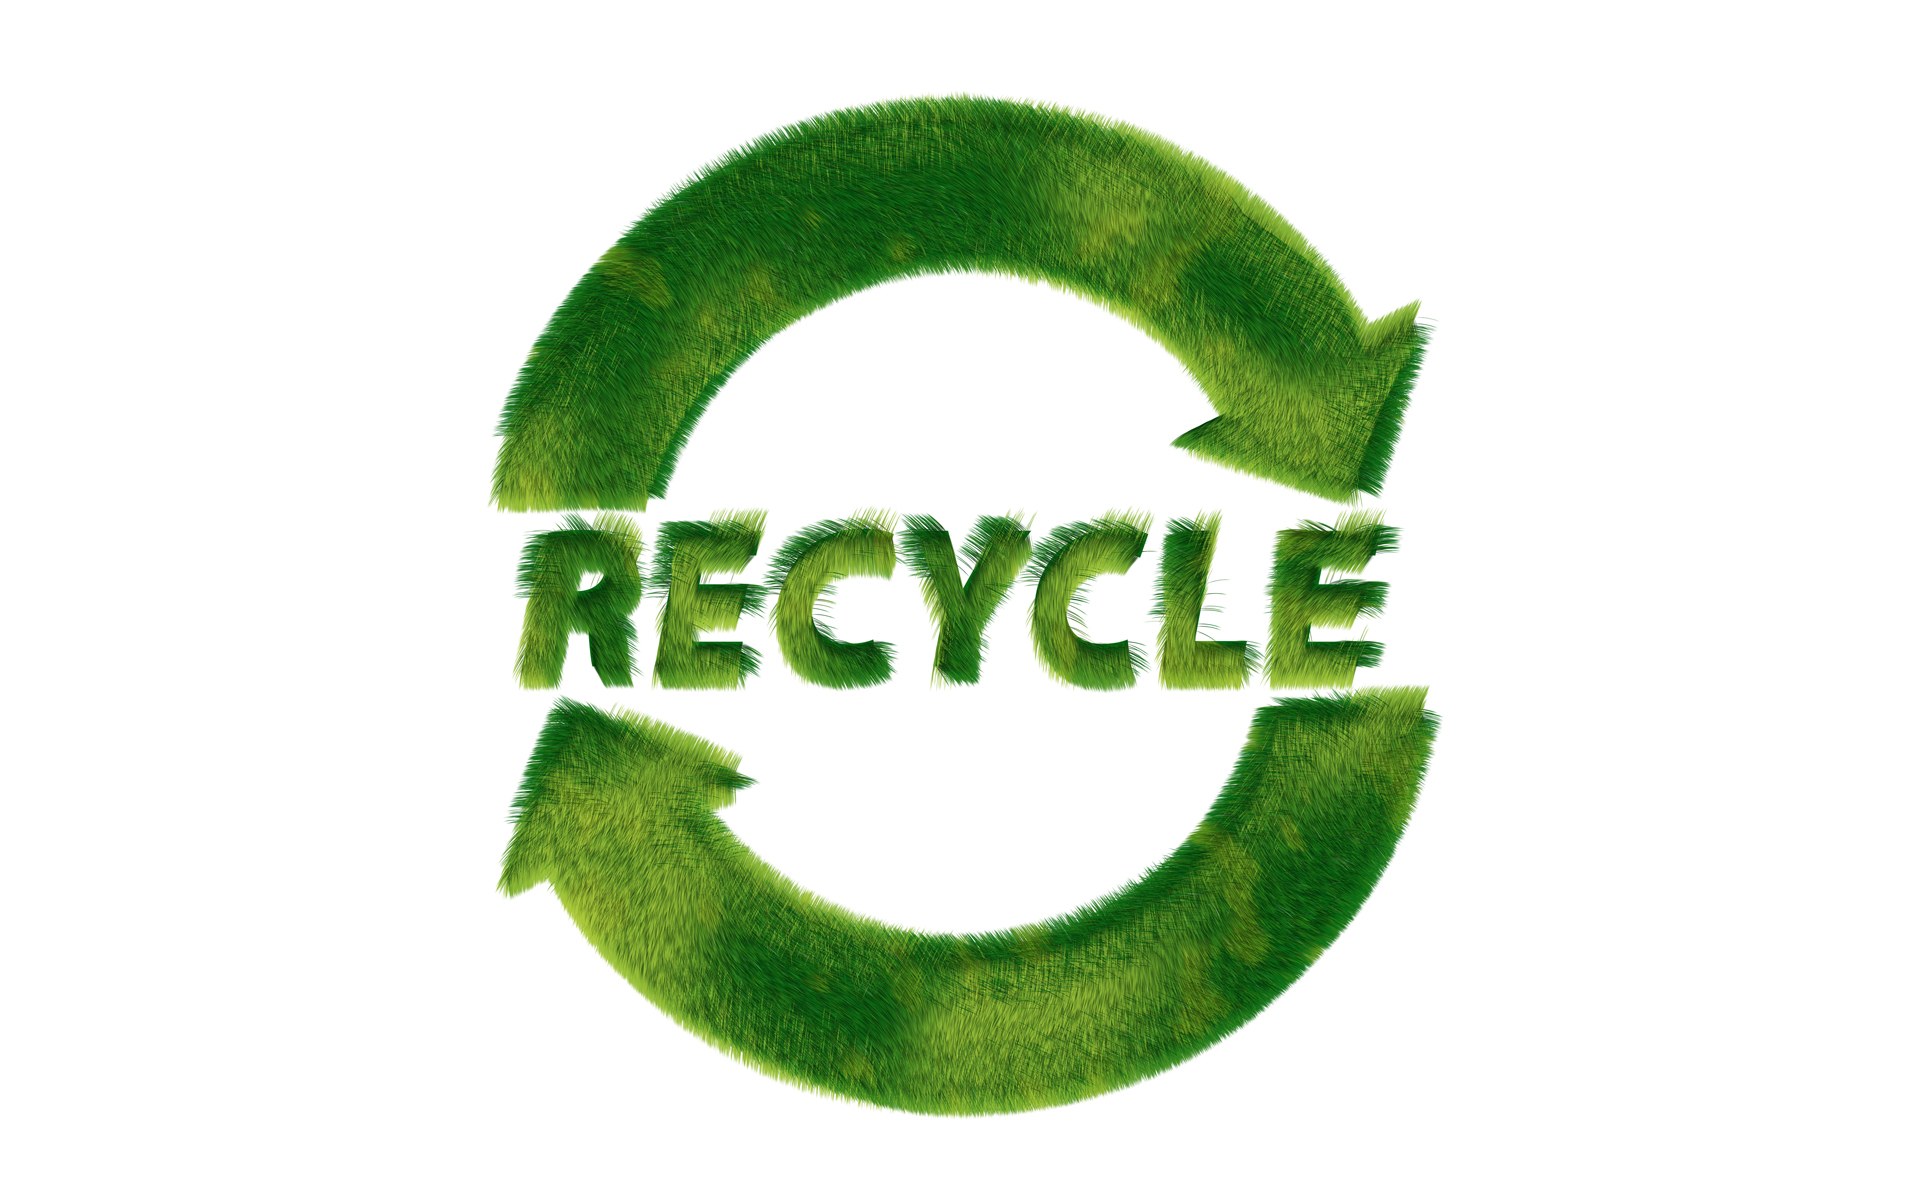 Greenpeace symbols recycle sign 03 Wallpaper Wallpaper 74764